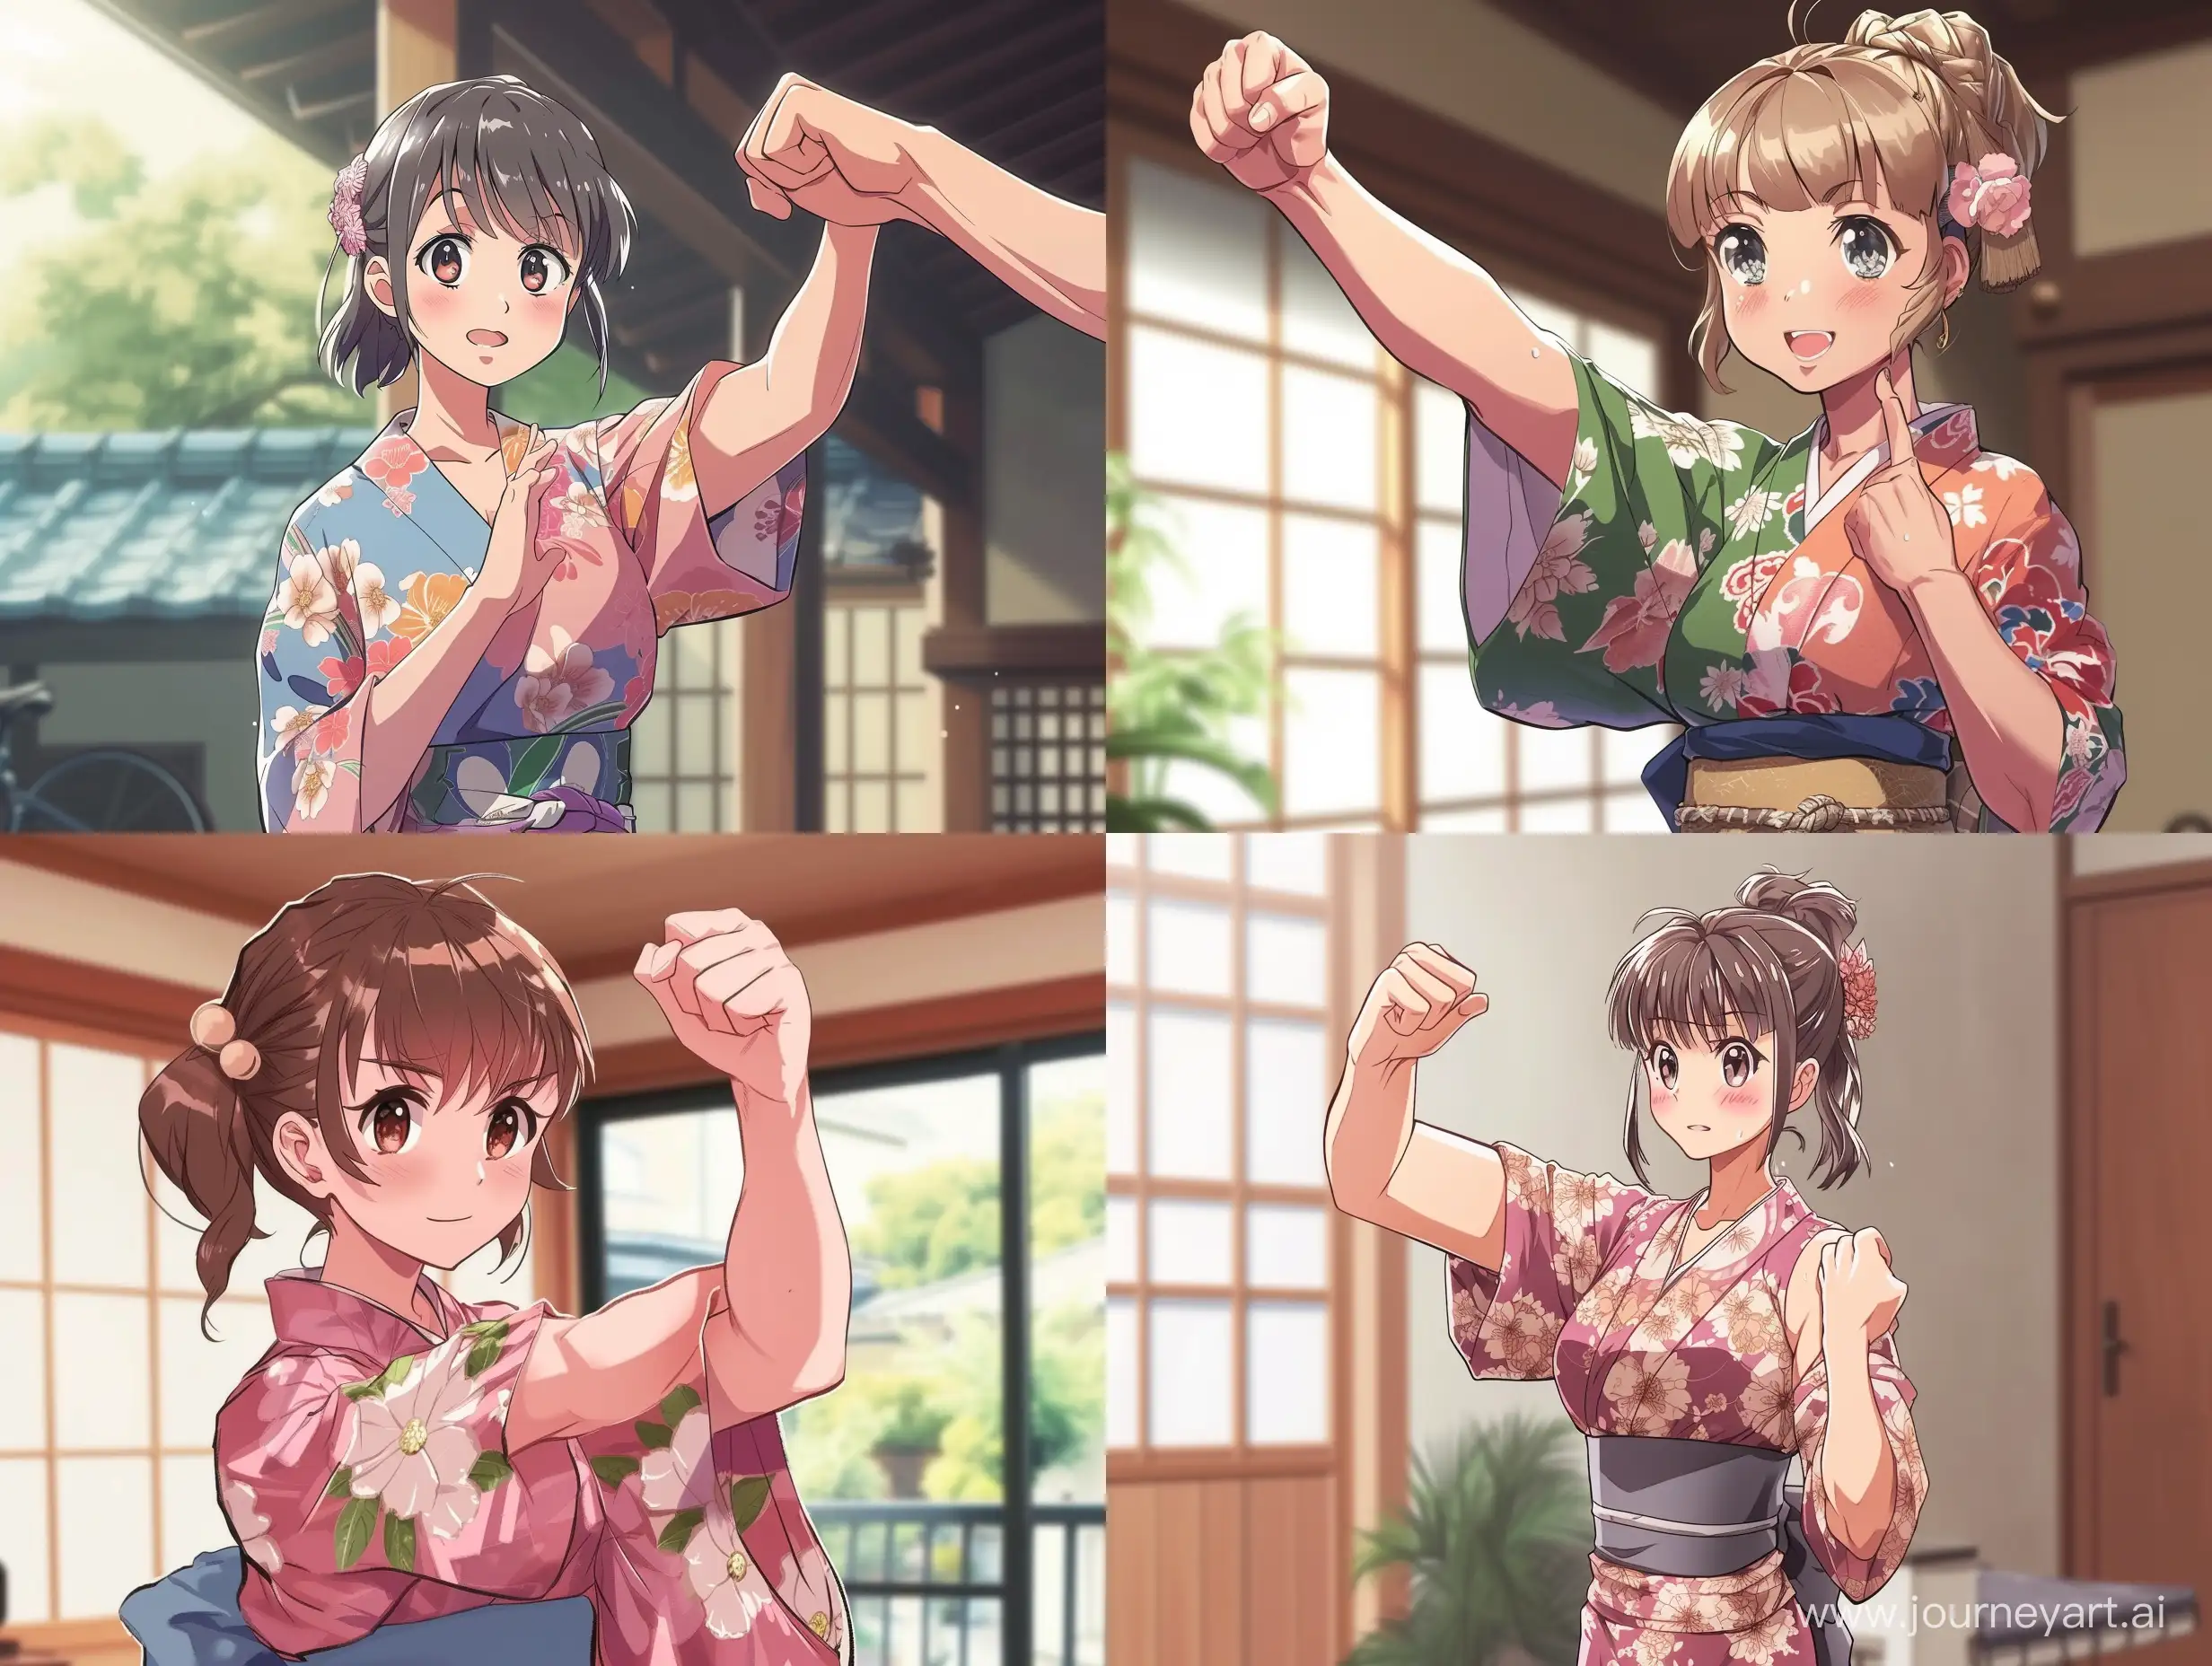 Confident-Anime-Girl-in-Kimono-Flexing-Strength